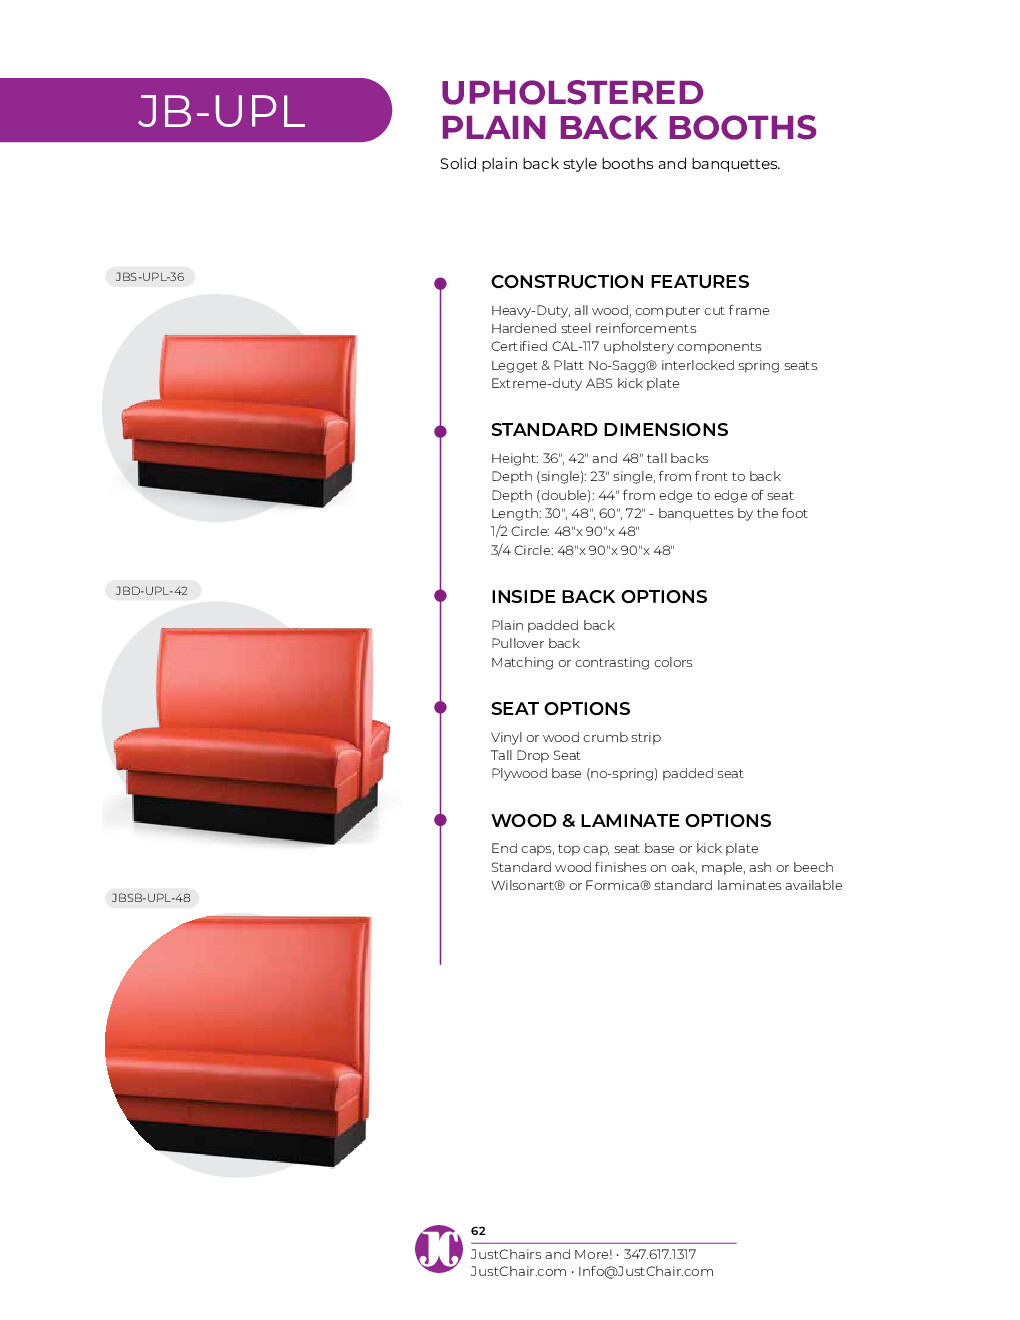 JustChair JBS-UPL-42-GR1/COM Custom Booth, Single Plain Back, Upholstered Seat, 42